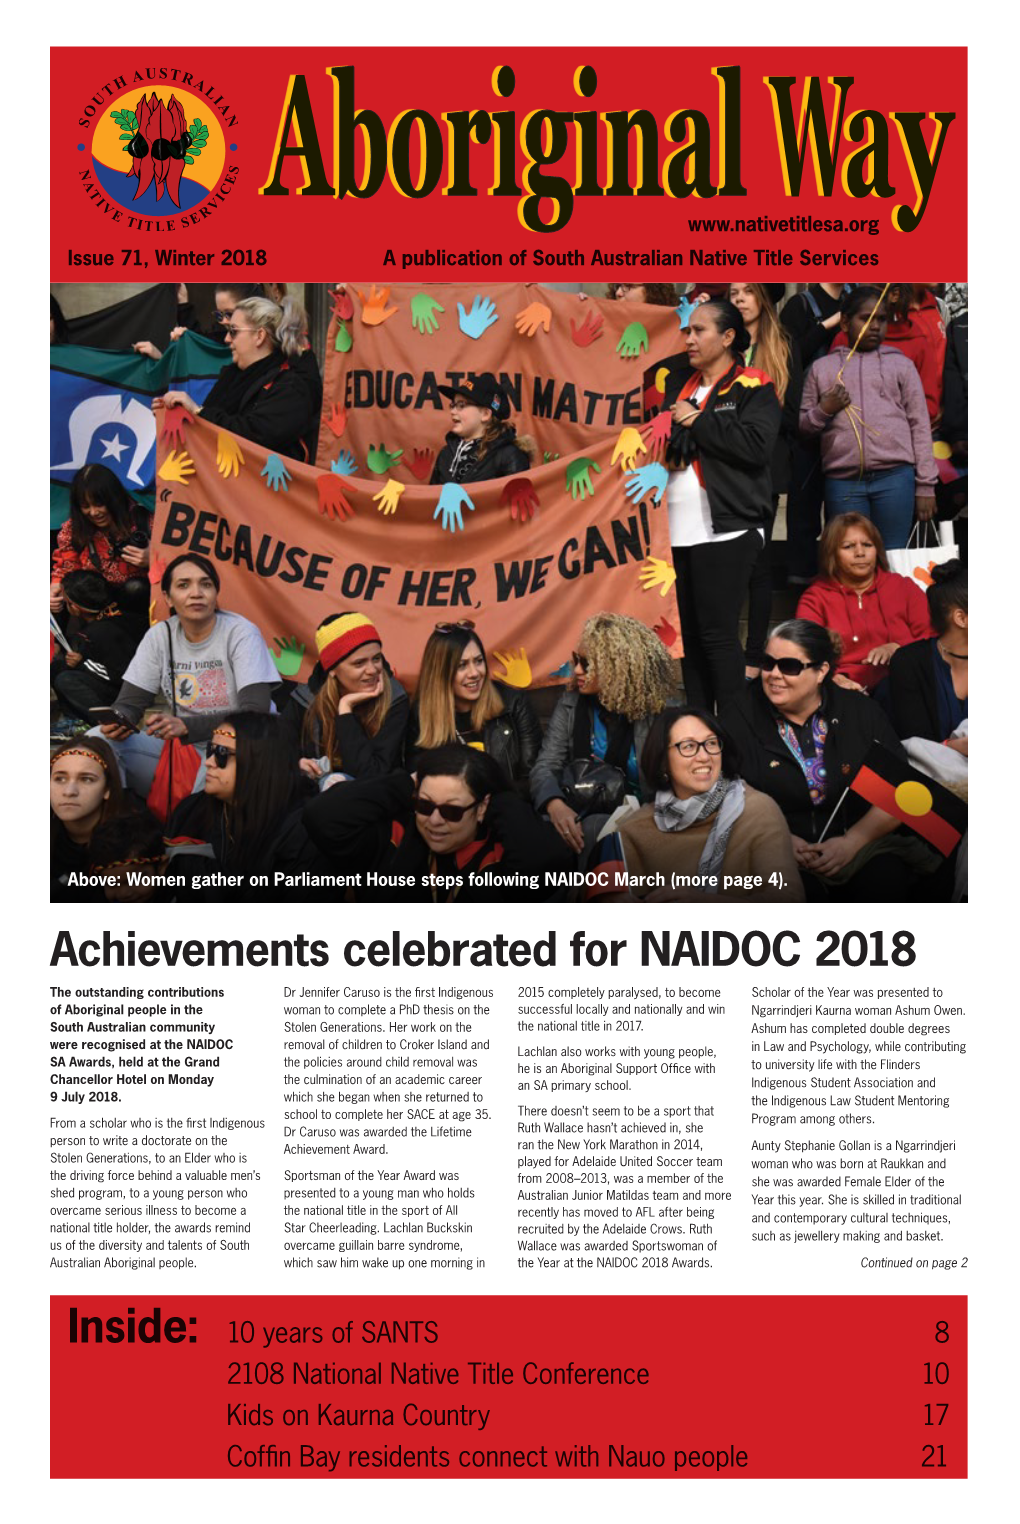 Achievements Celebrated for NAIDOC 2018